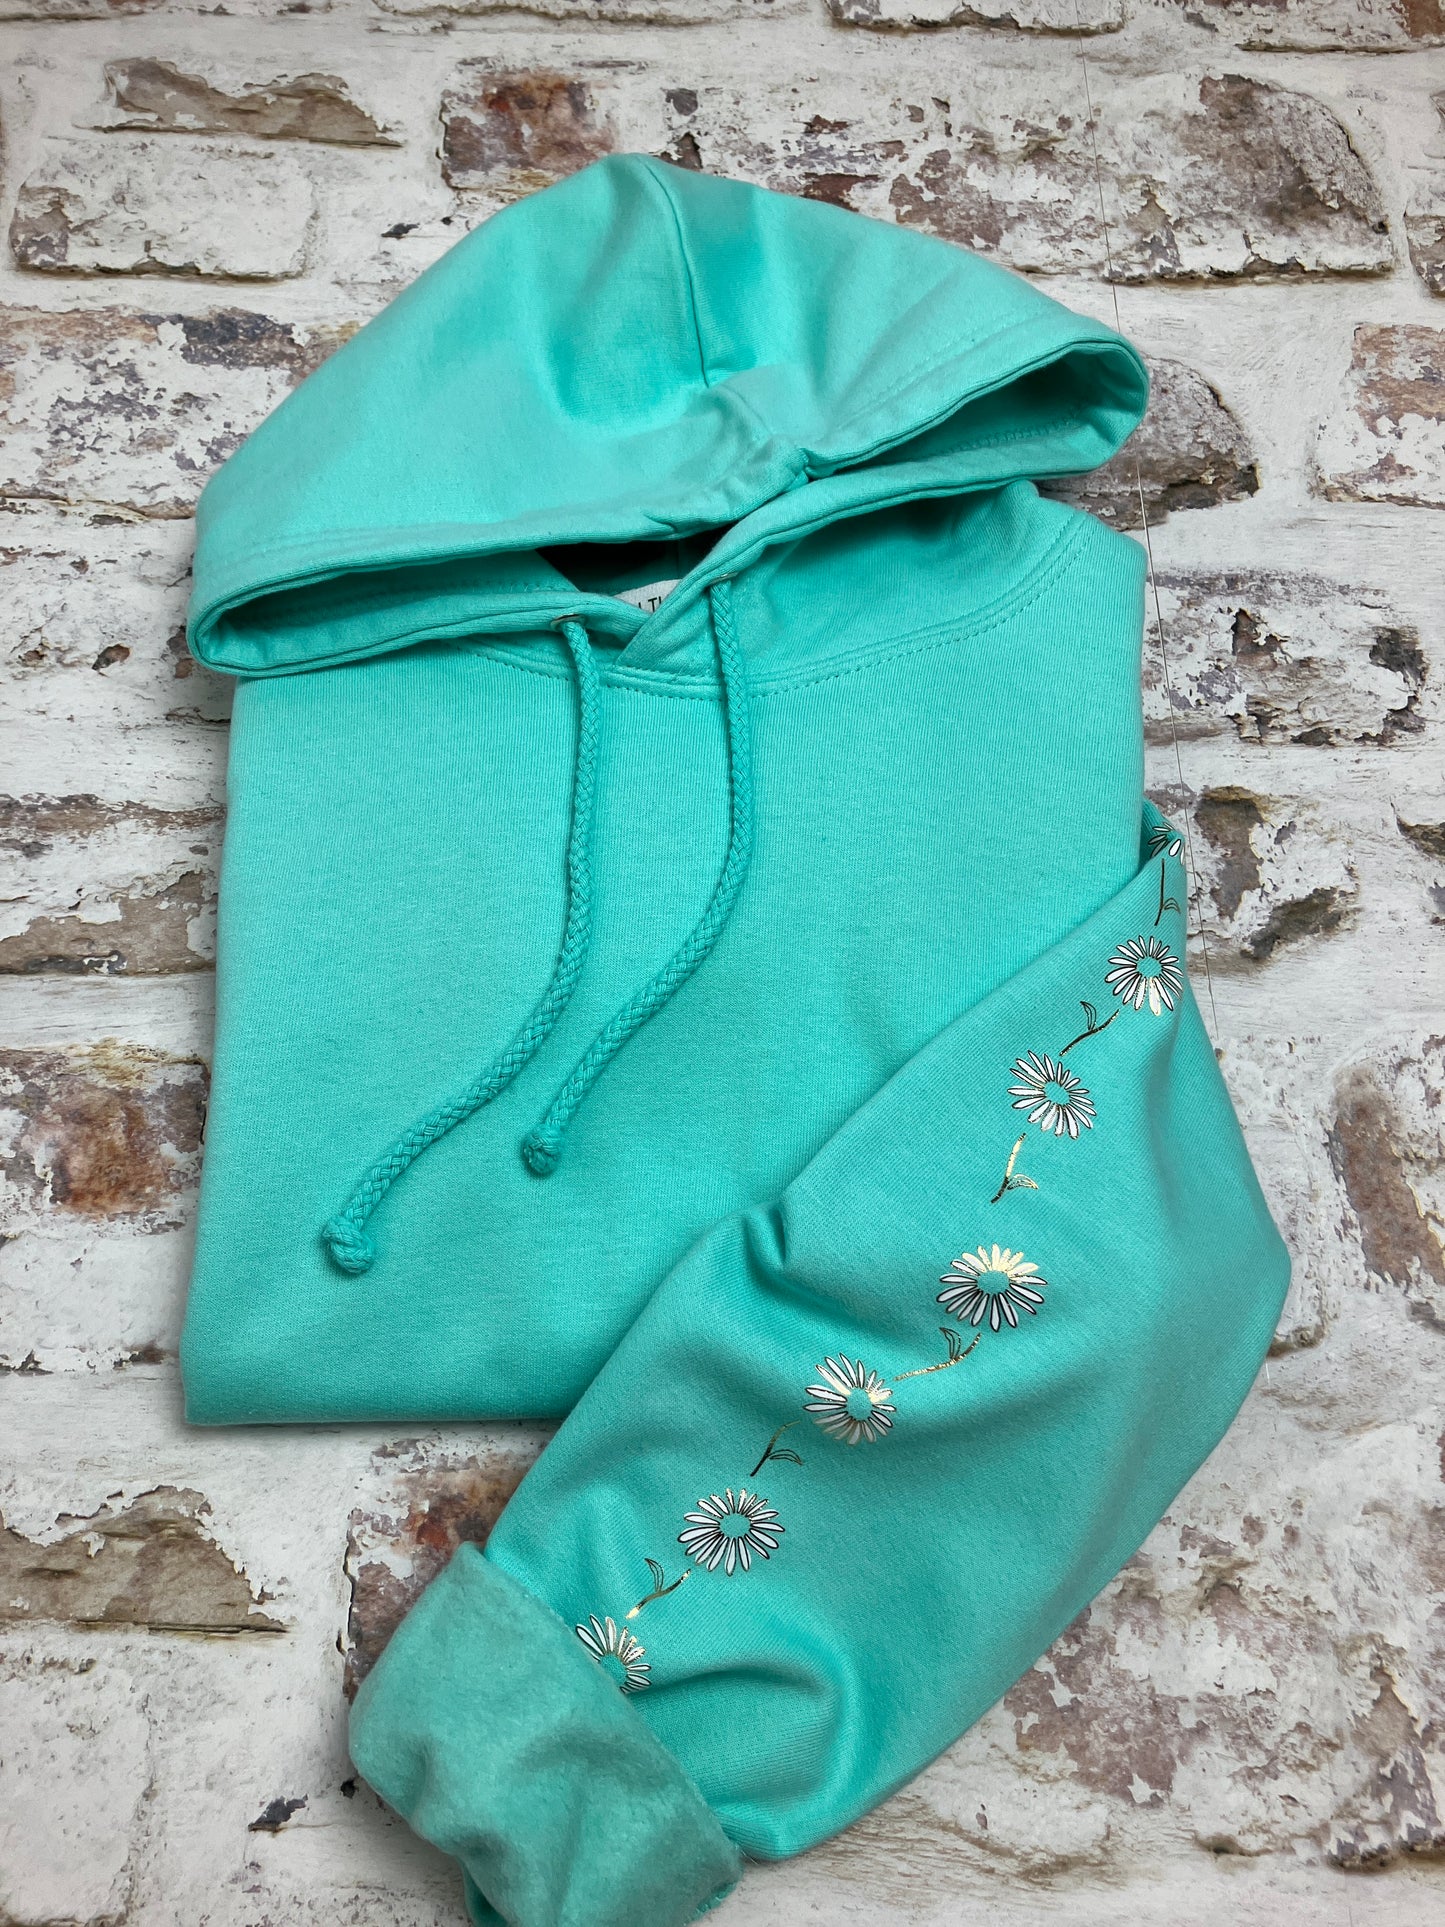 The Daisy chain sleeved hoody